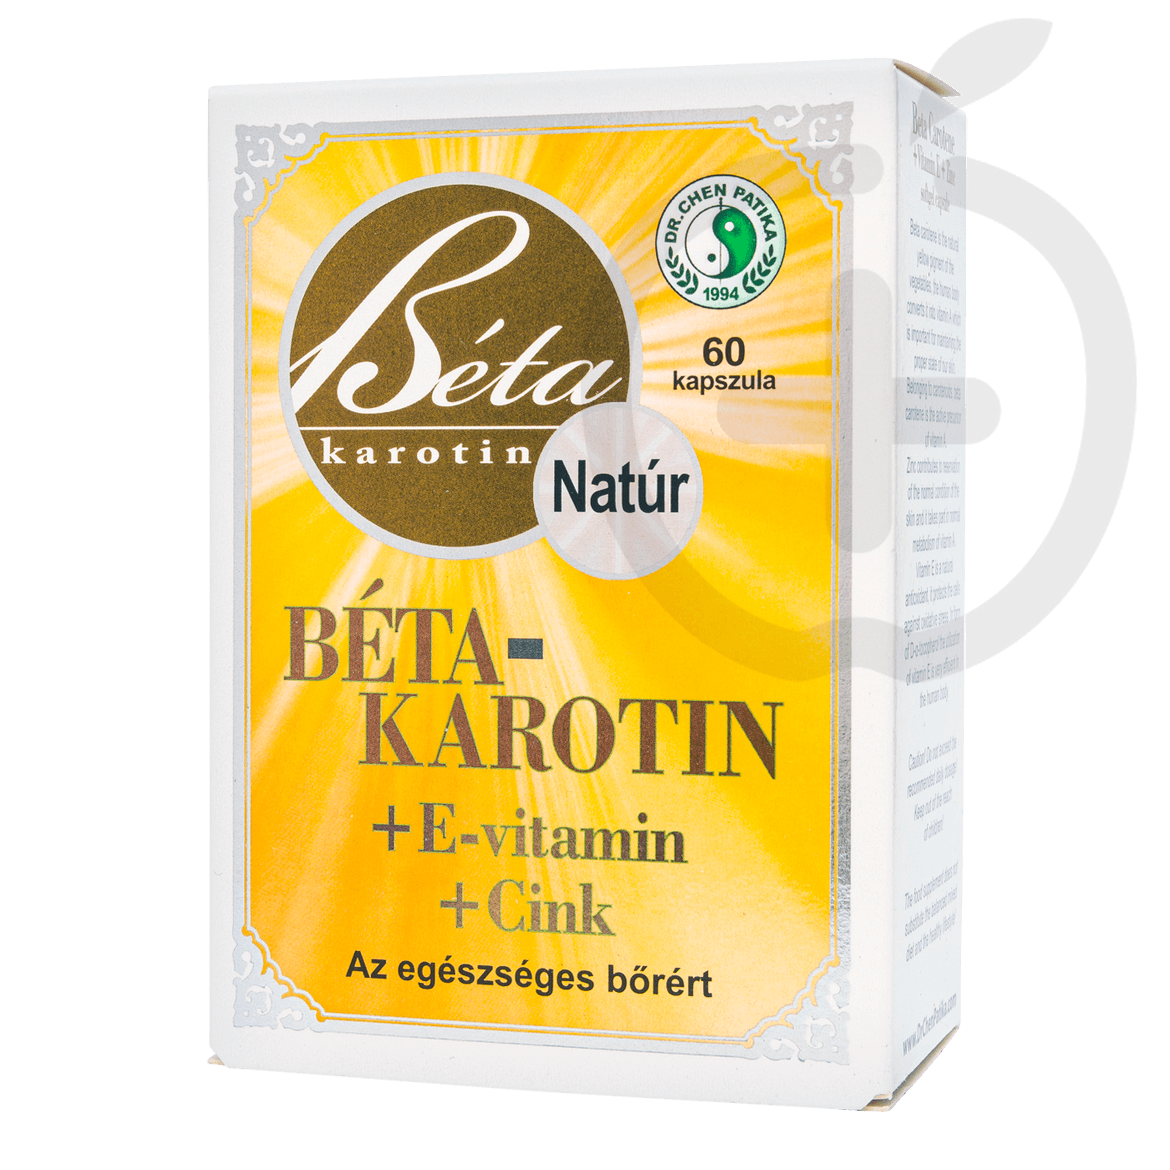 Dr. Chen Béta-Karotin +E-vitamin +Cink kapszula